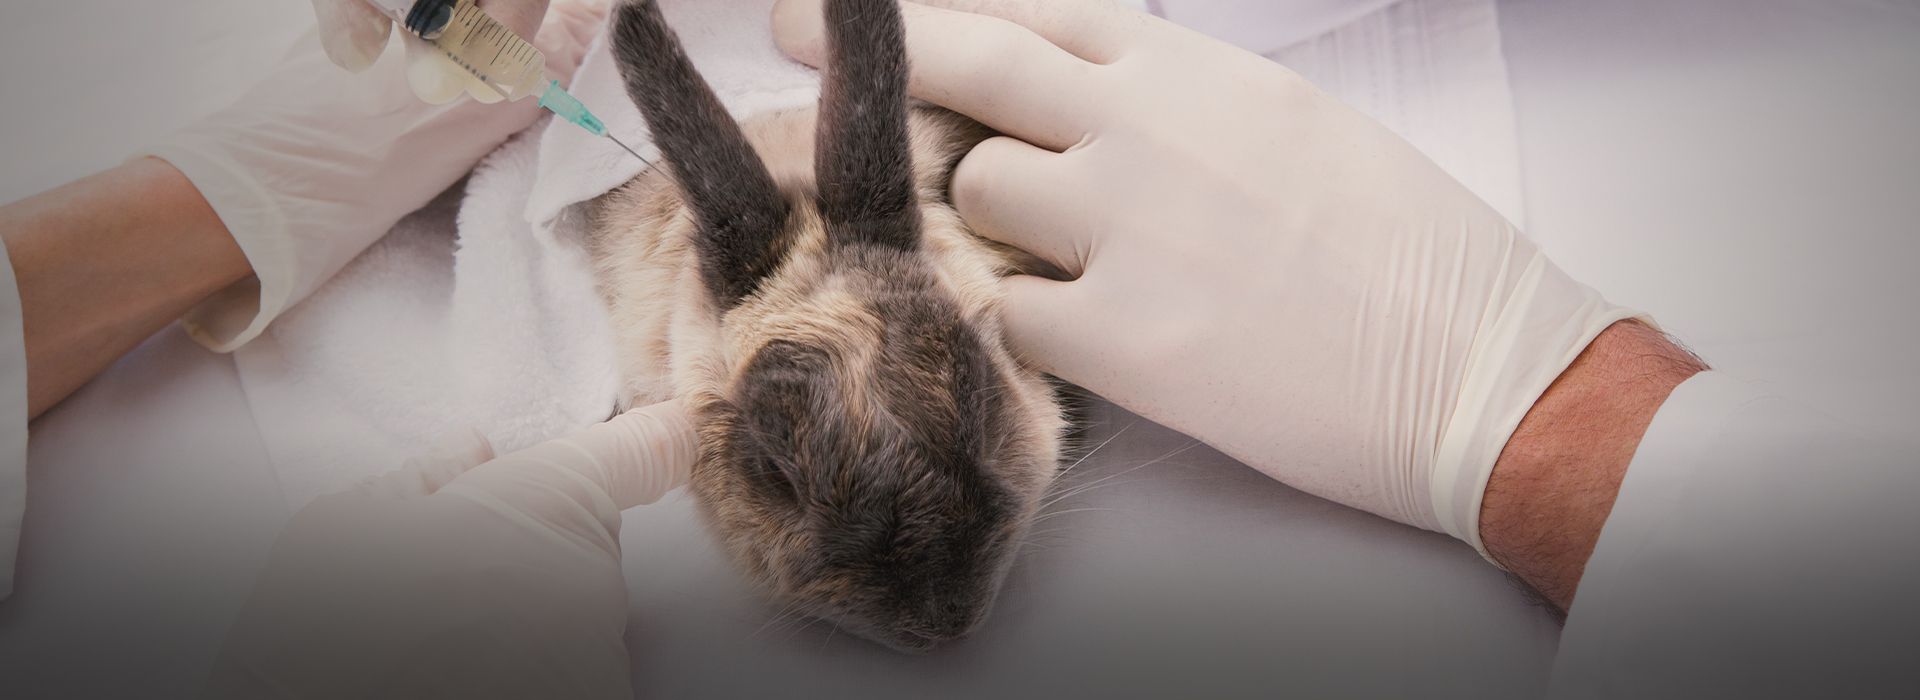 Veterinarians doing injection at rabbit